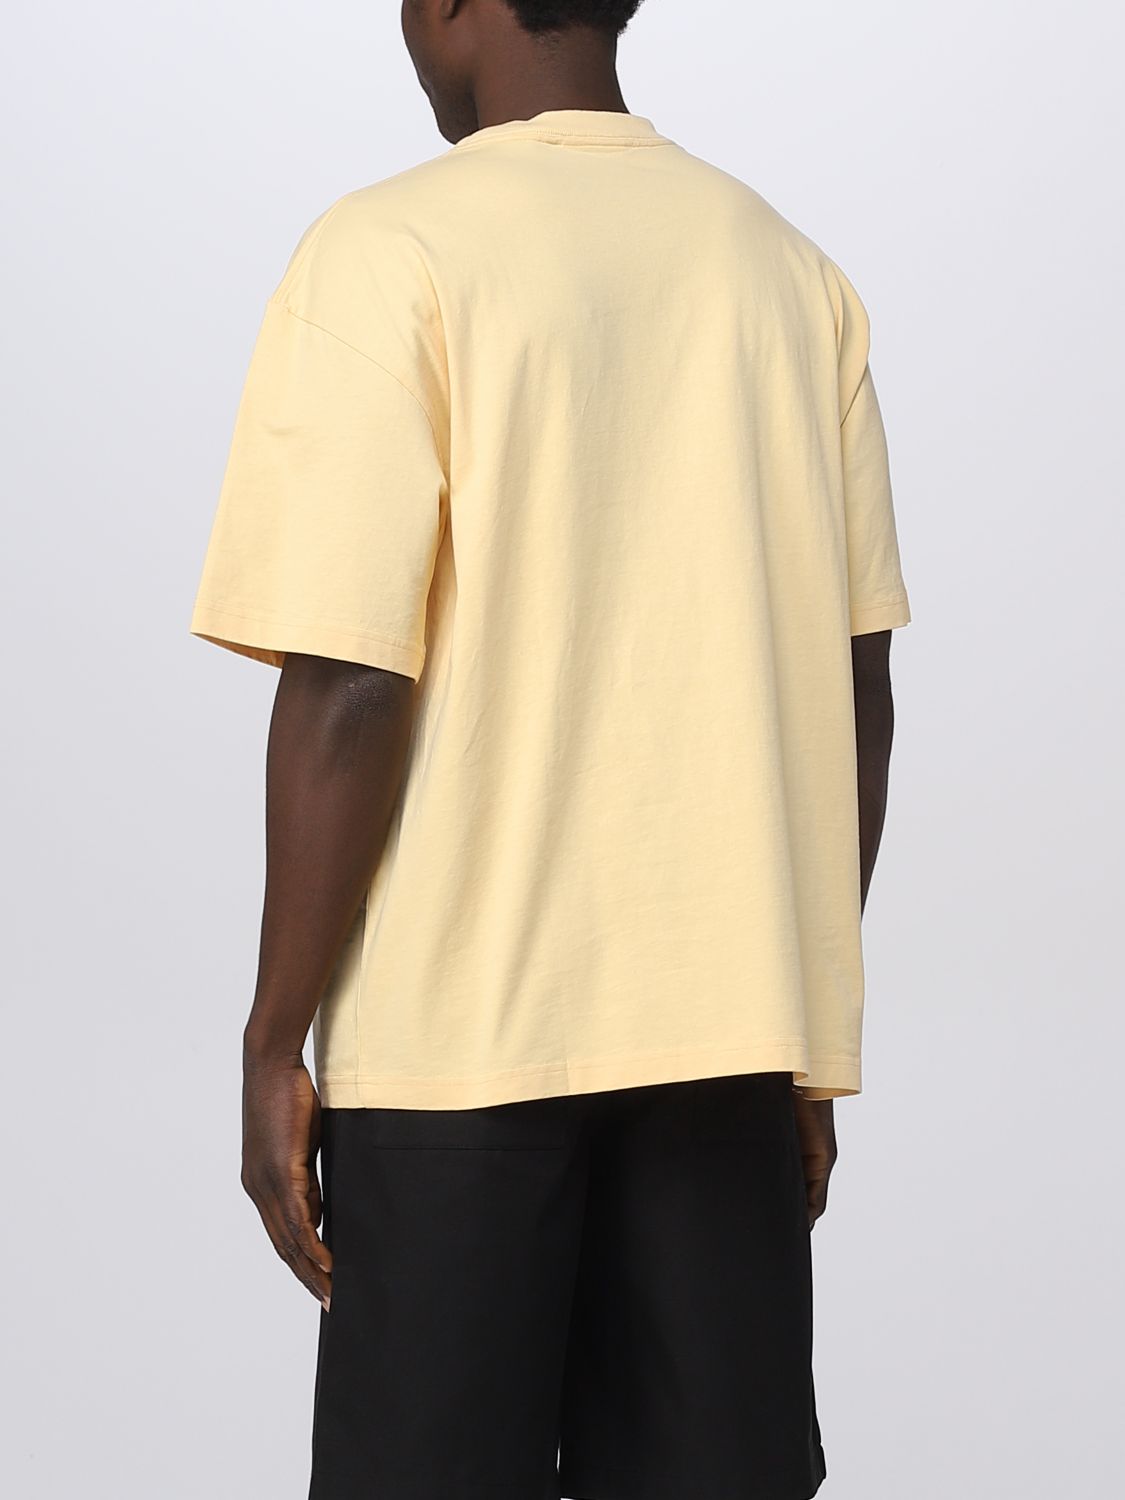 AXEL ARIGATO: t-shirt for man - Orange | Axel Arigato t-shirt A1135001 ...